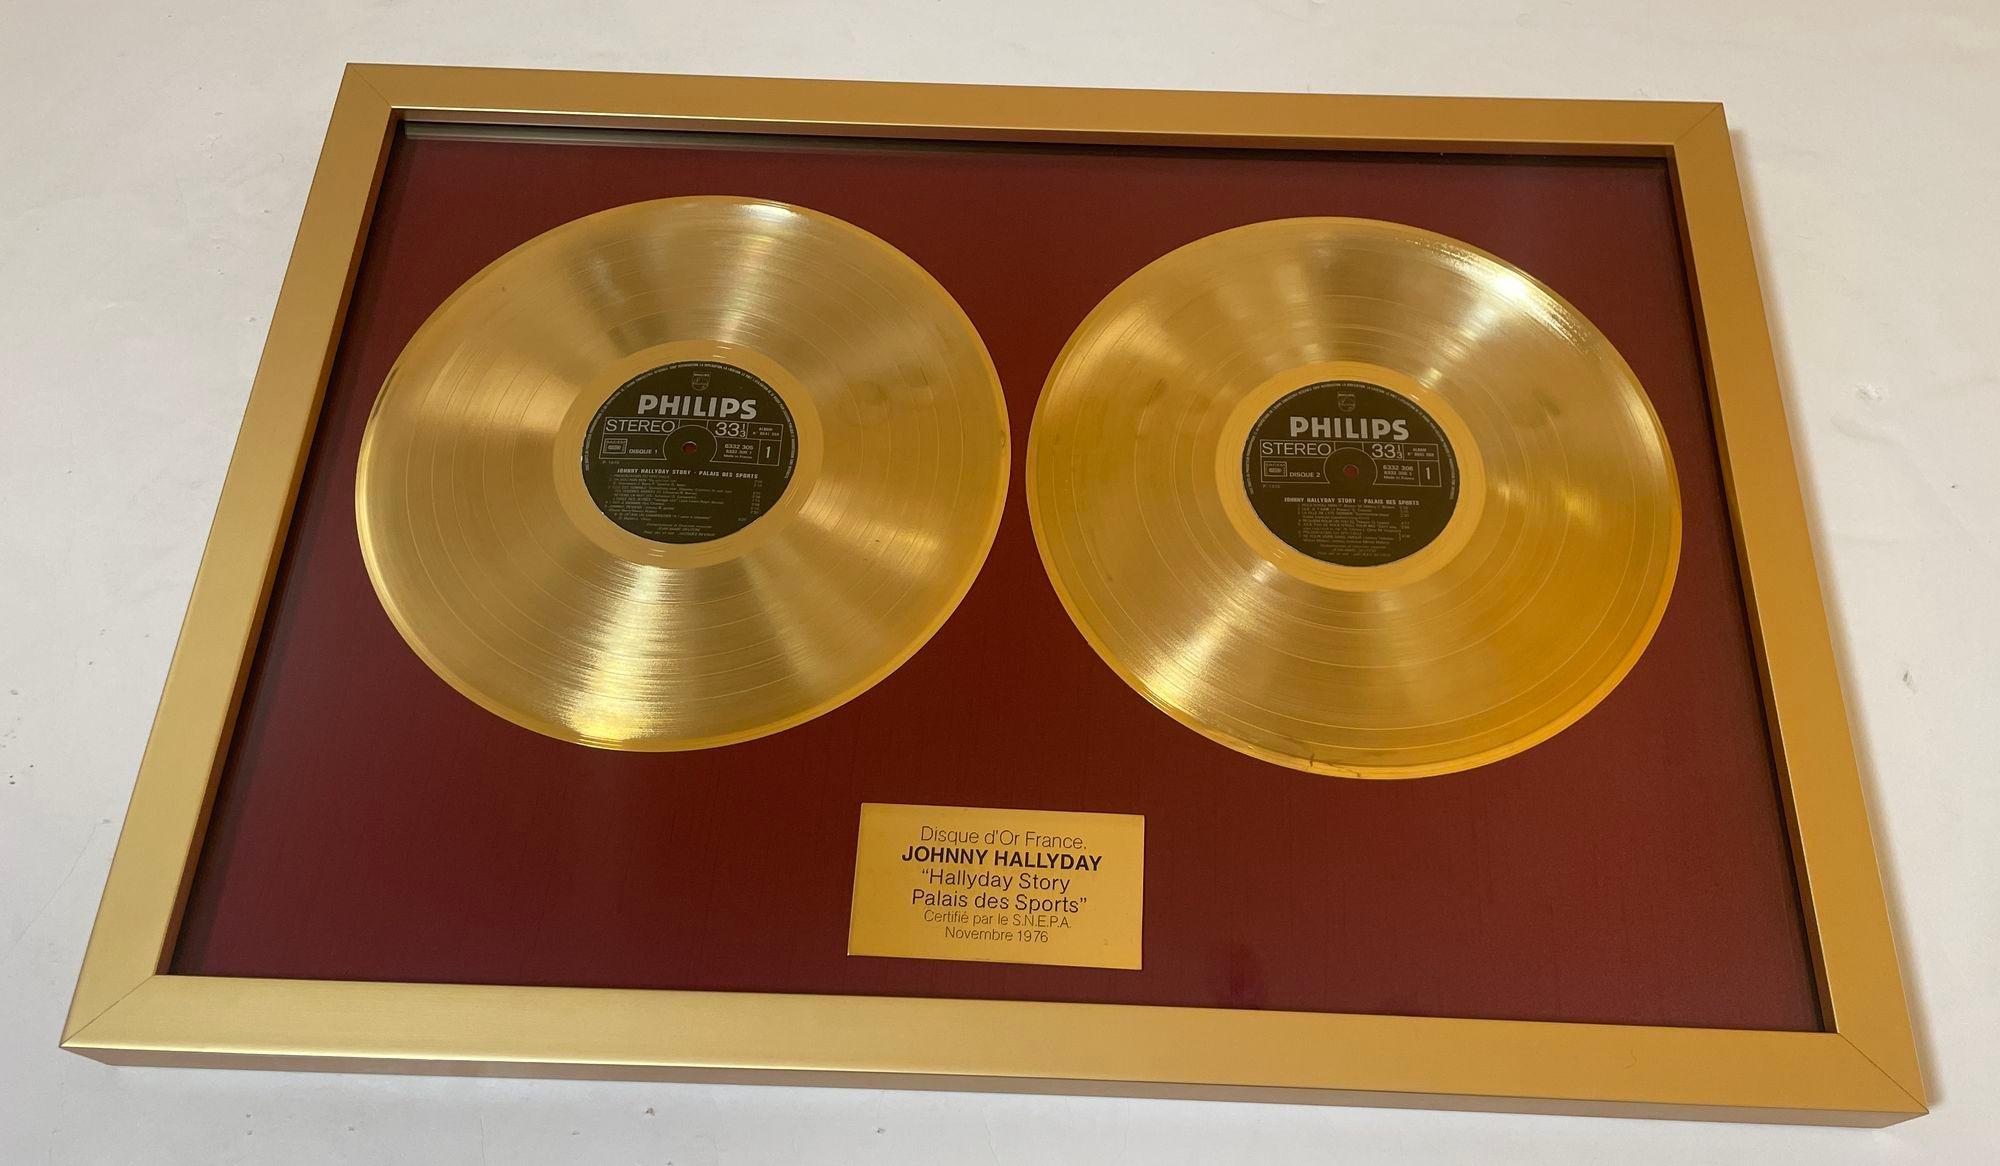 Official Gold Record Award France Johnny Halliday Story Palais des Sports 1976.
Gold Record Award - Official Disque d'Or France Johnny Hallyday 